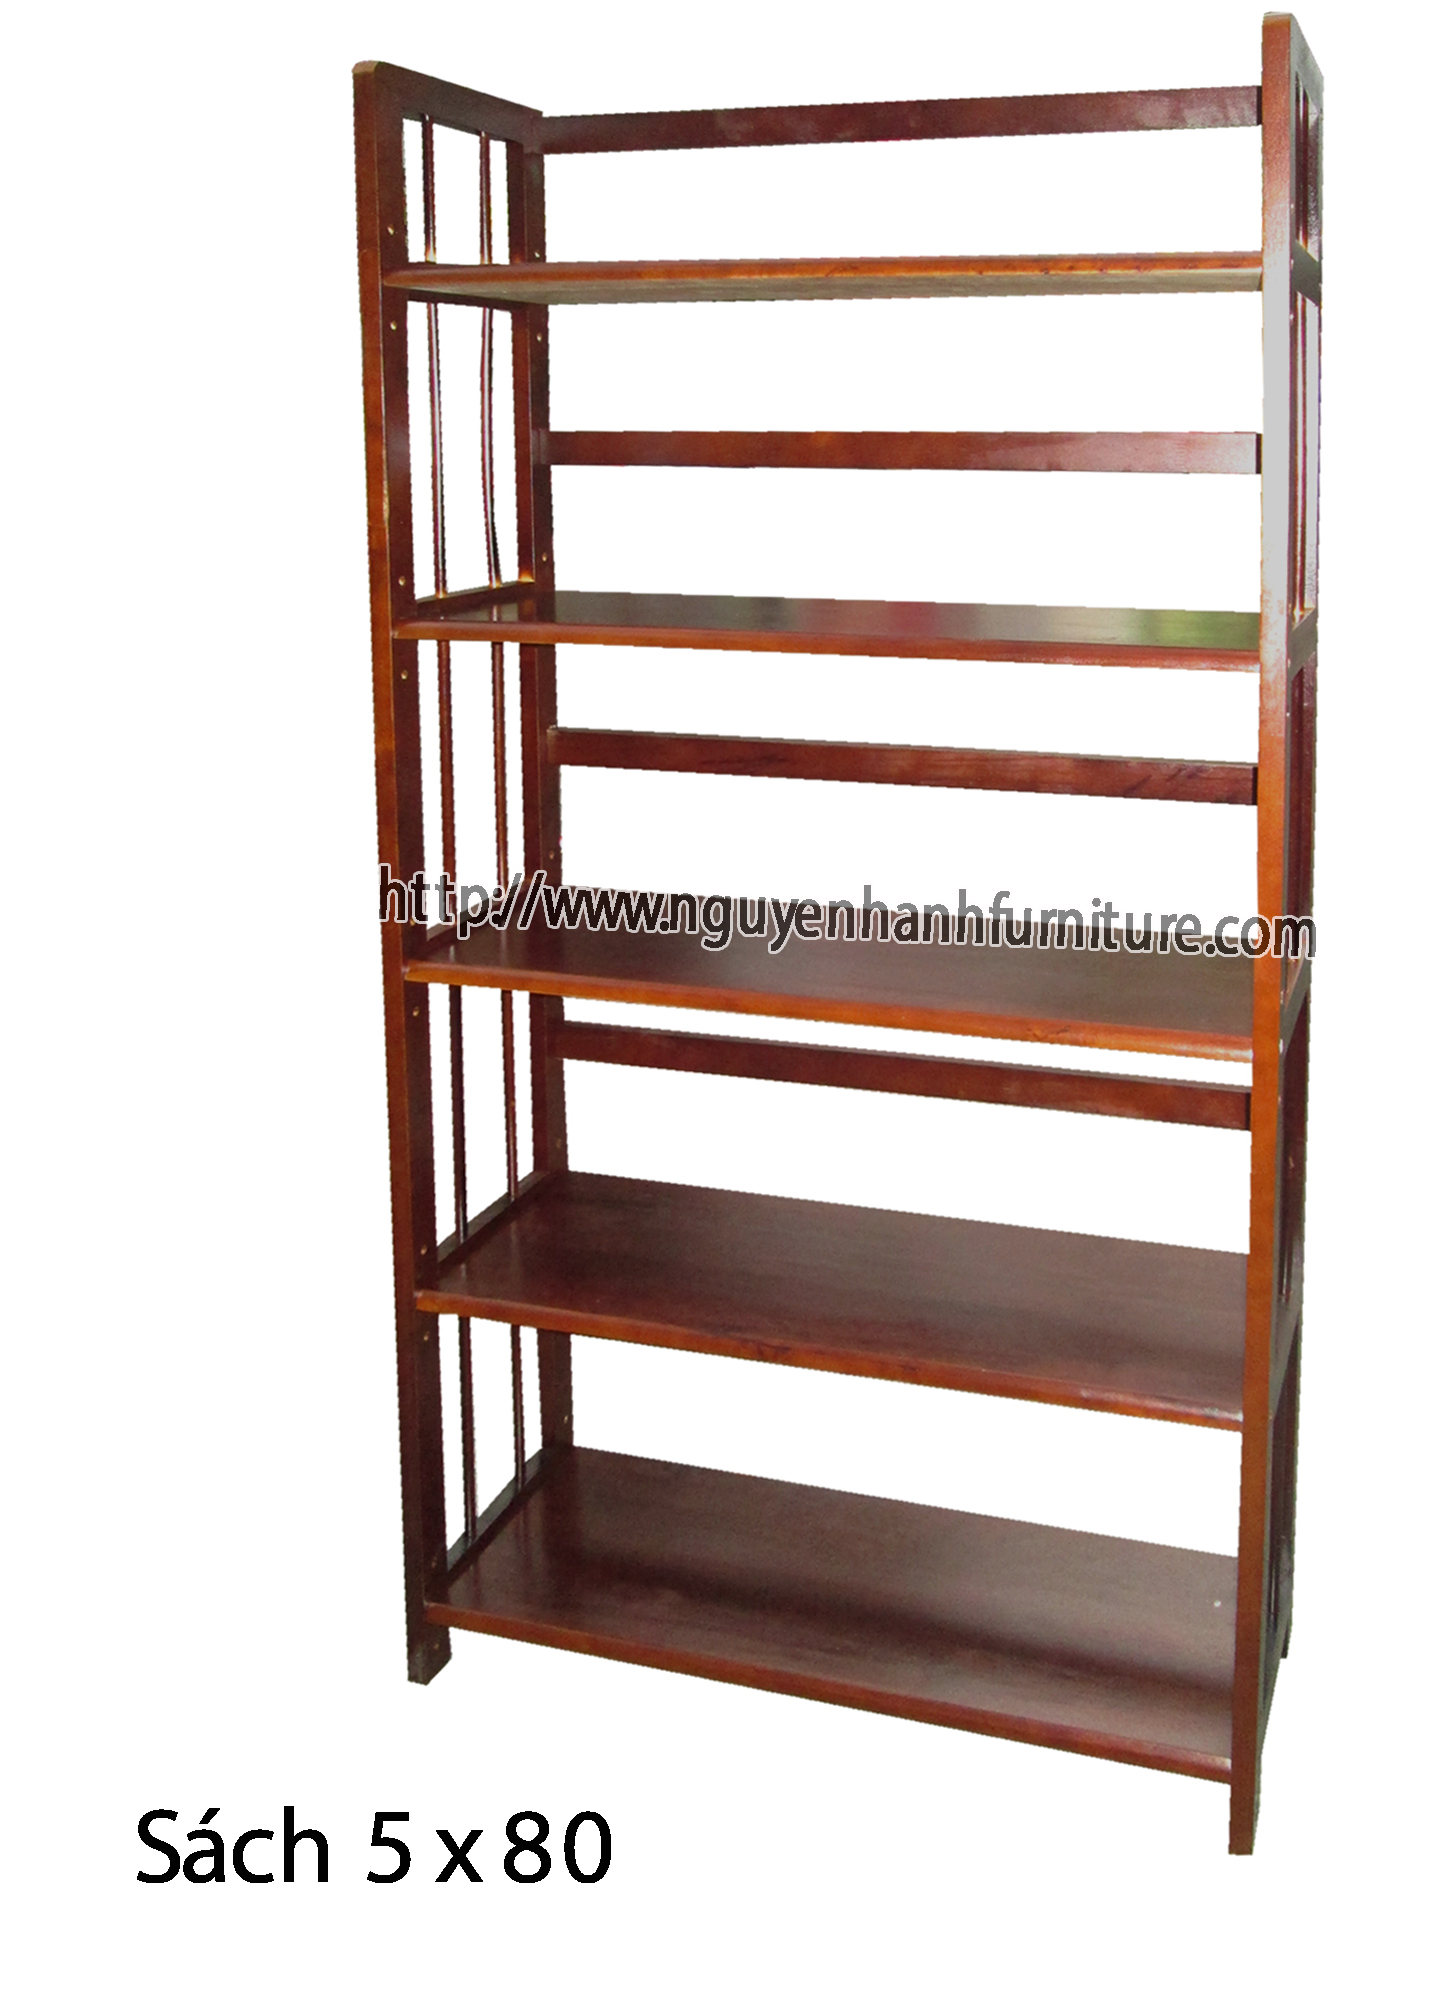 Name product: 5 storey Adjustable Bookshelf 80 (Brown) - Dimensions: 80 x 28 x 157 (H) - Description: Wood natural rubber